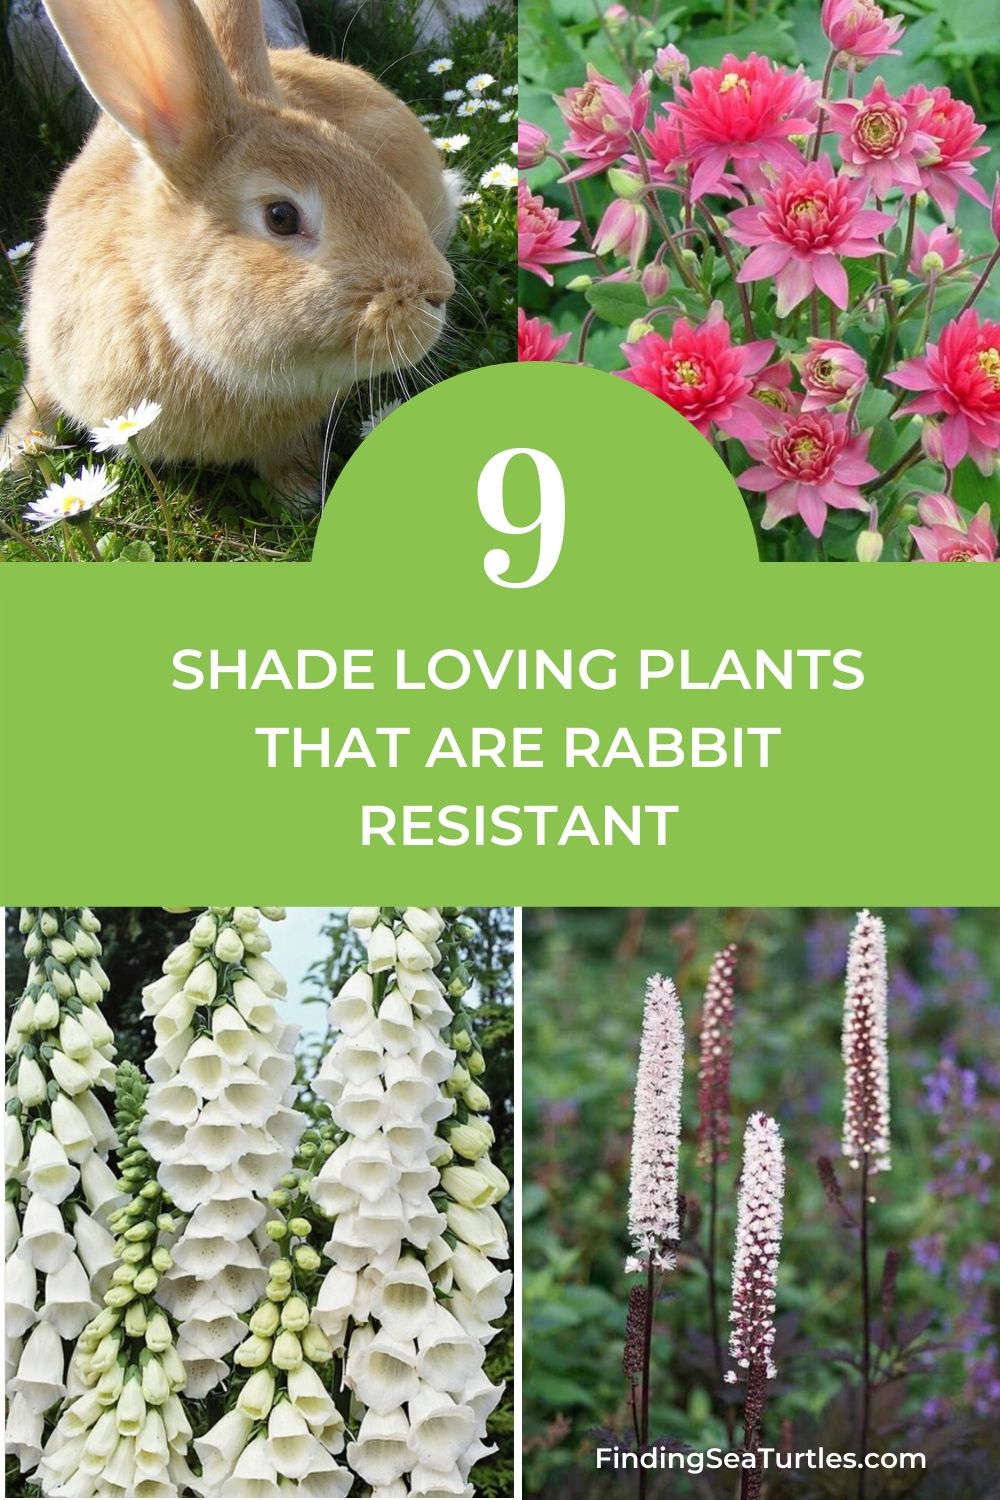 9 Shade Loving Plants that are Rabbit Resistant #PollinatorPlants #RabbitResistant #PlantsResistanttoRabbits #PlantsforPollinators #Gardening #Perennials